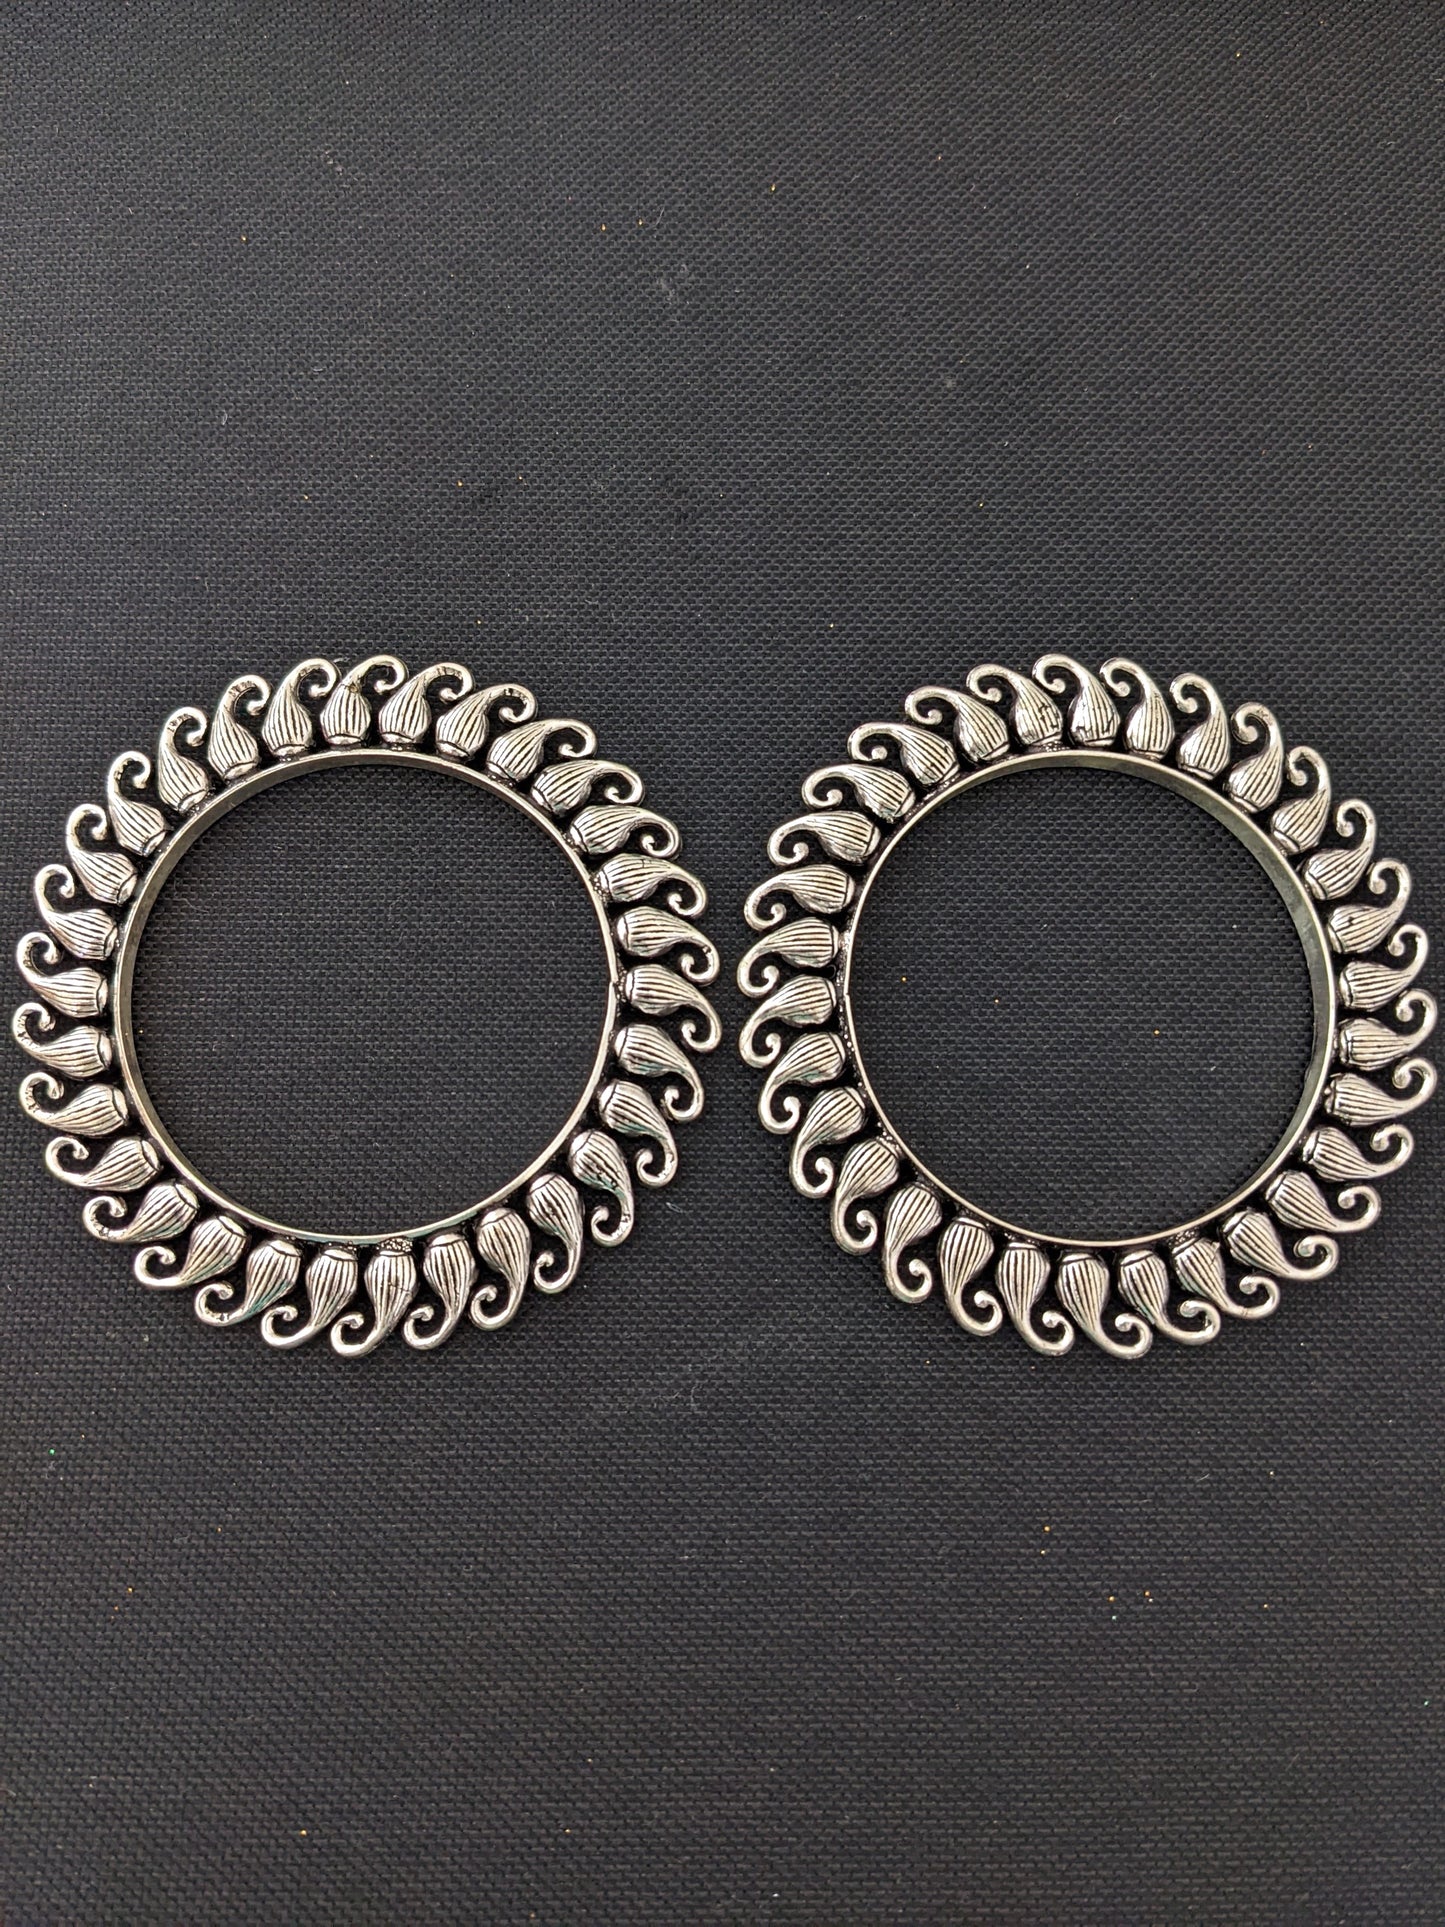 Oxidized silver pair bangles - Mango design